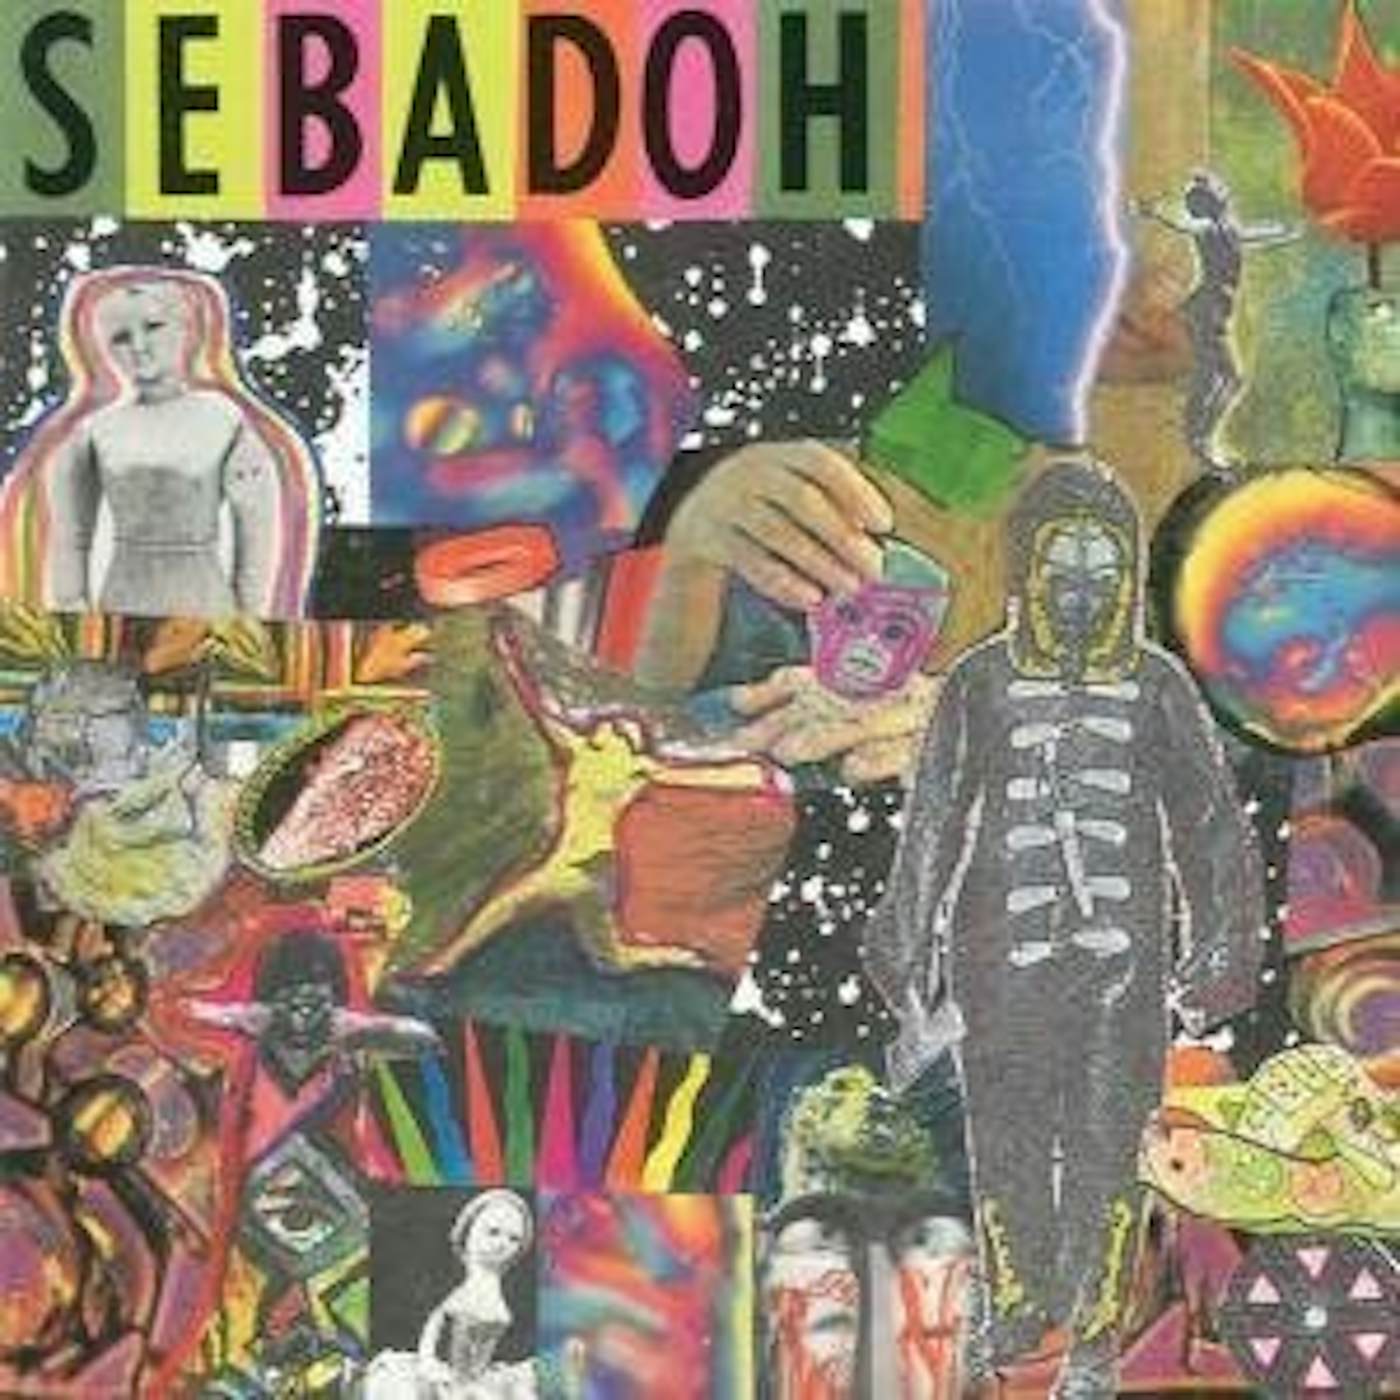 Sebadoh SMASH YOUR HEAD ON THE PUNK ROCK CD